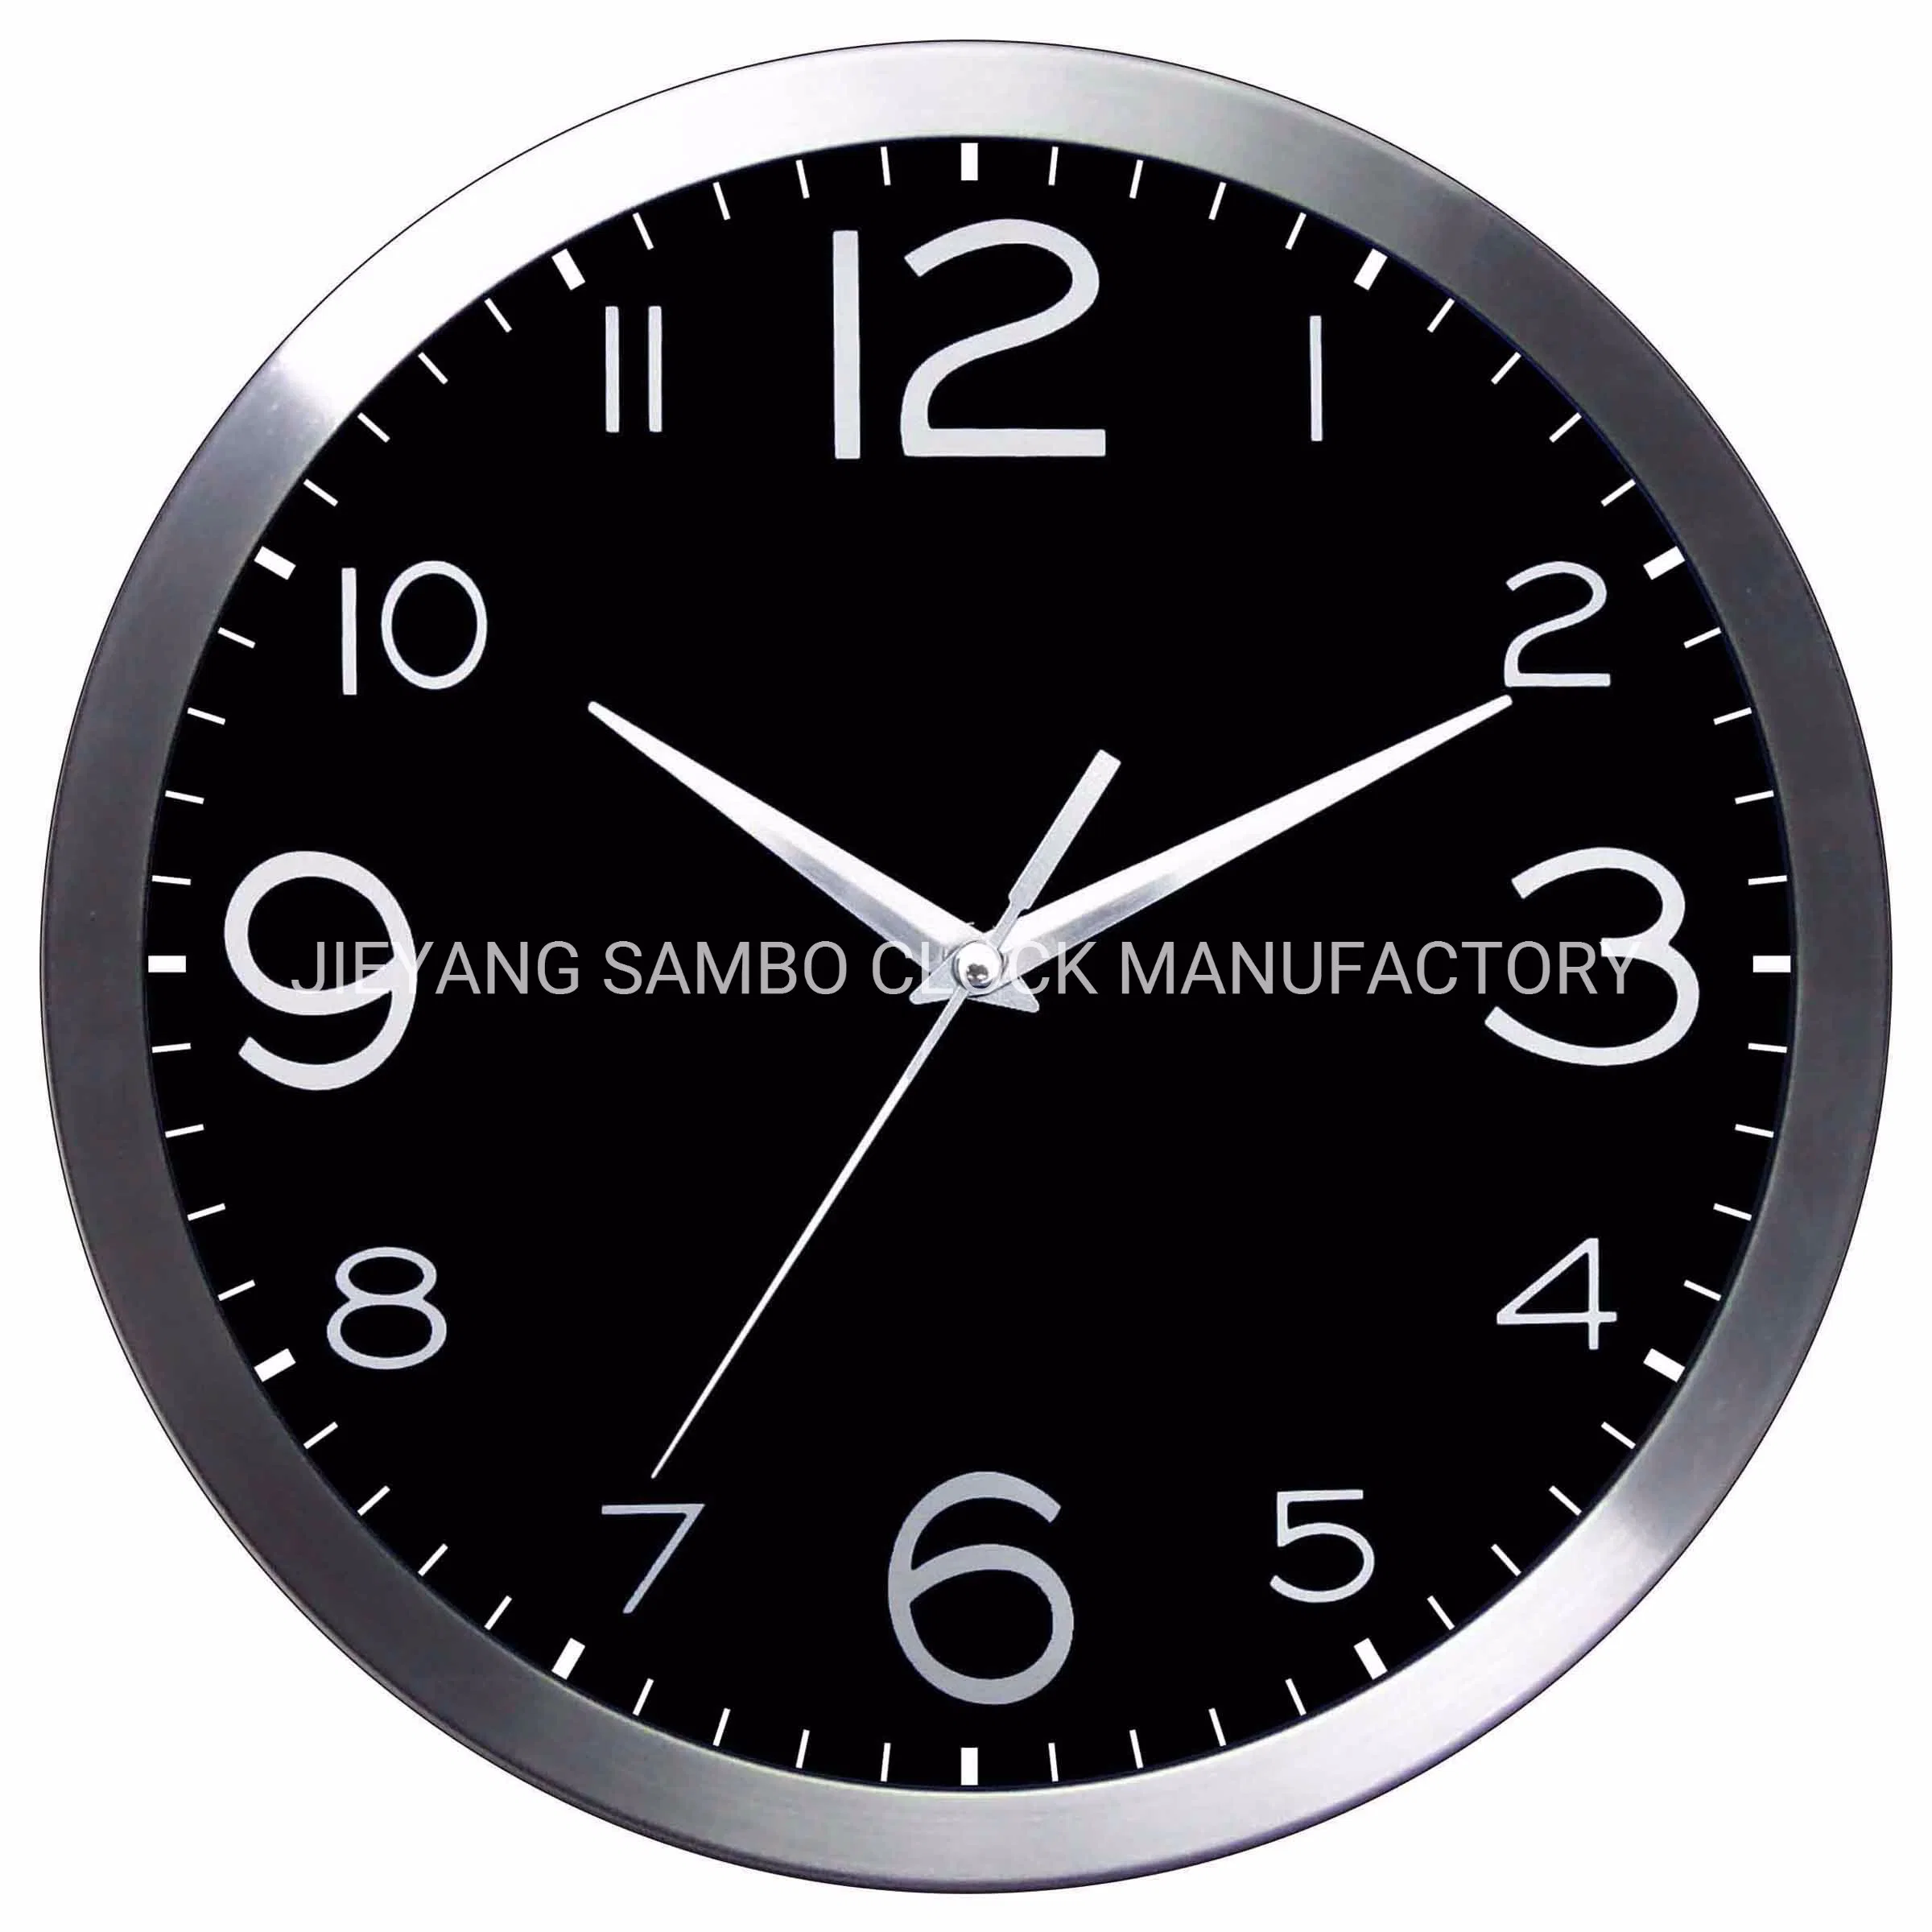 Novelty Analog Wall Clock and Wall Watch